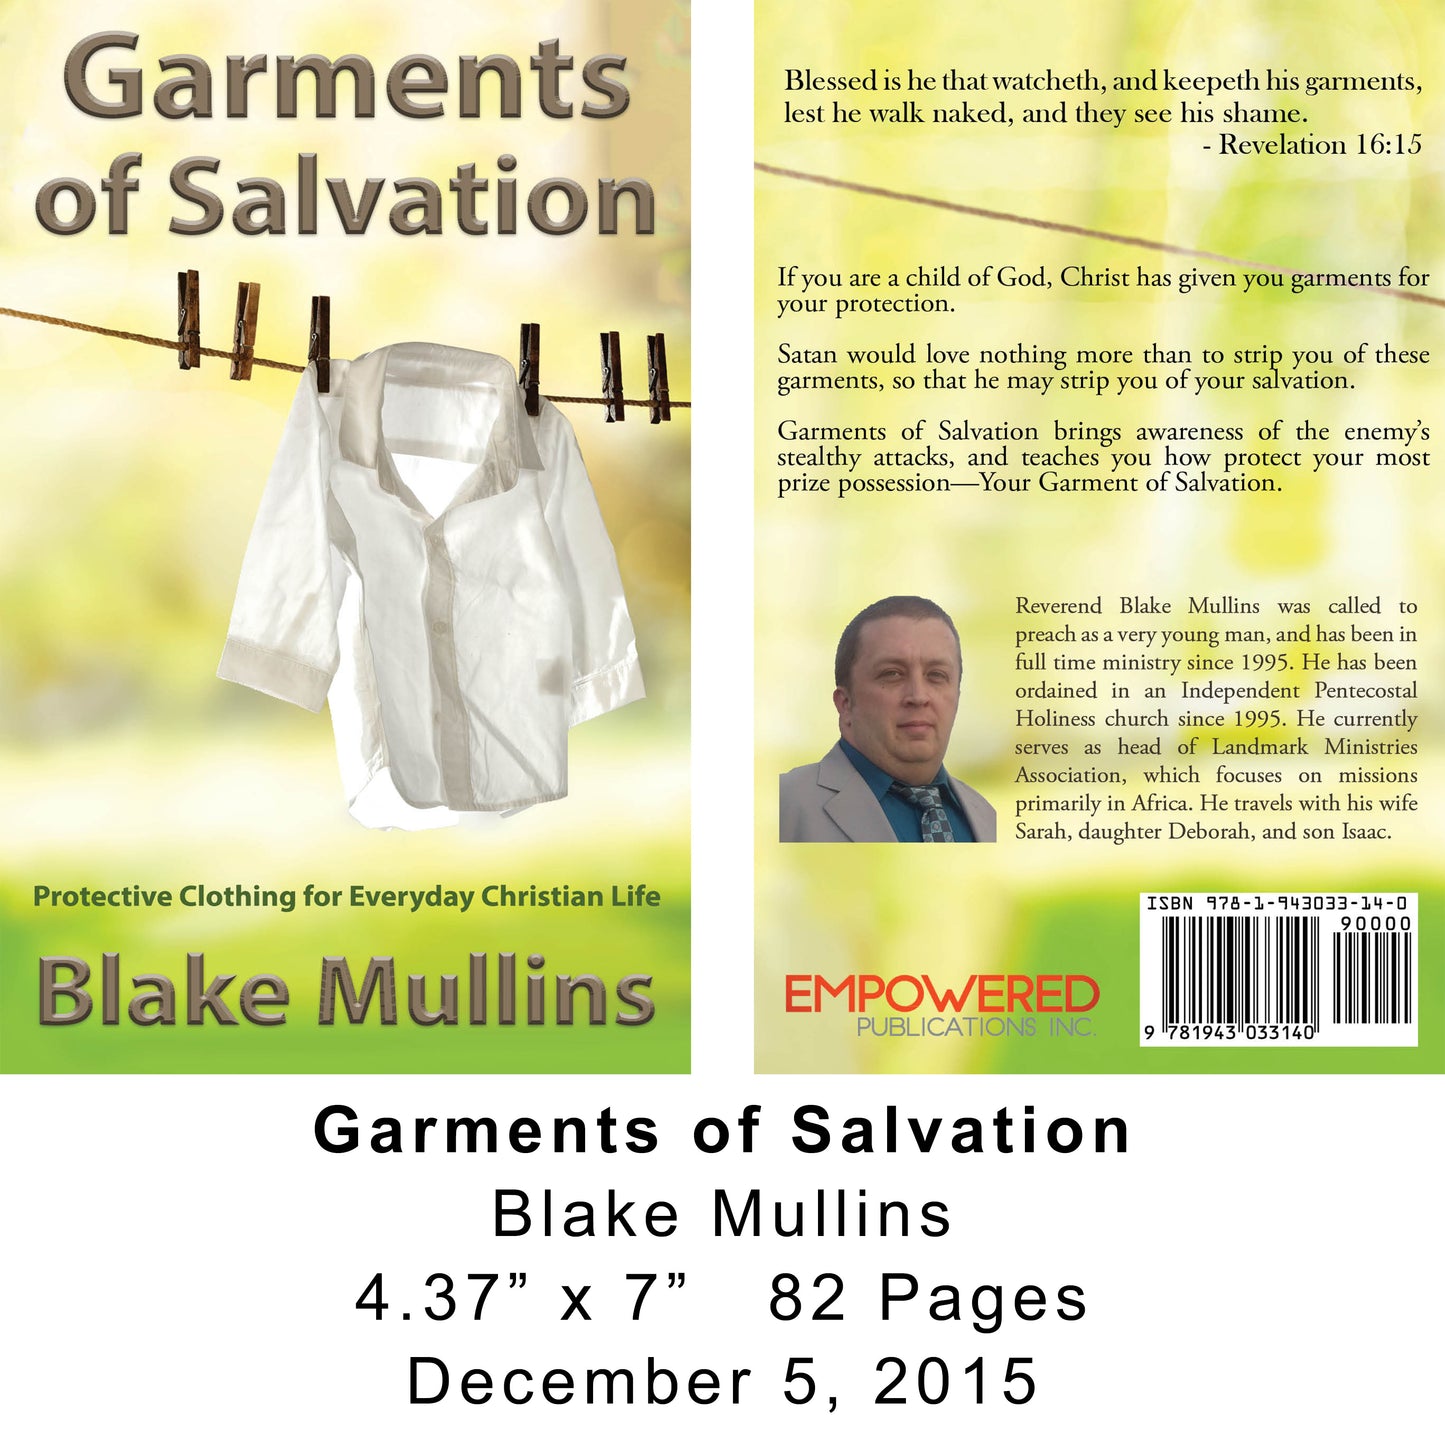 Garments of Salvation